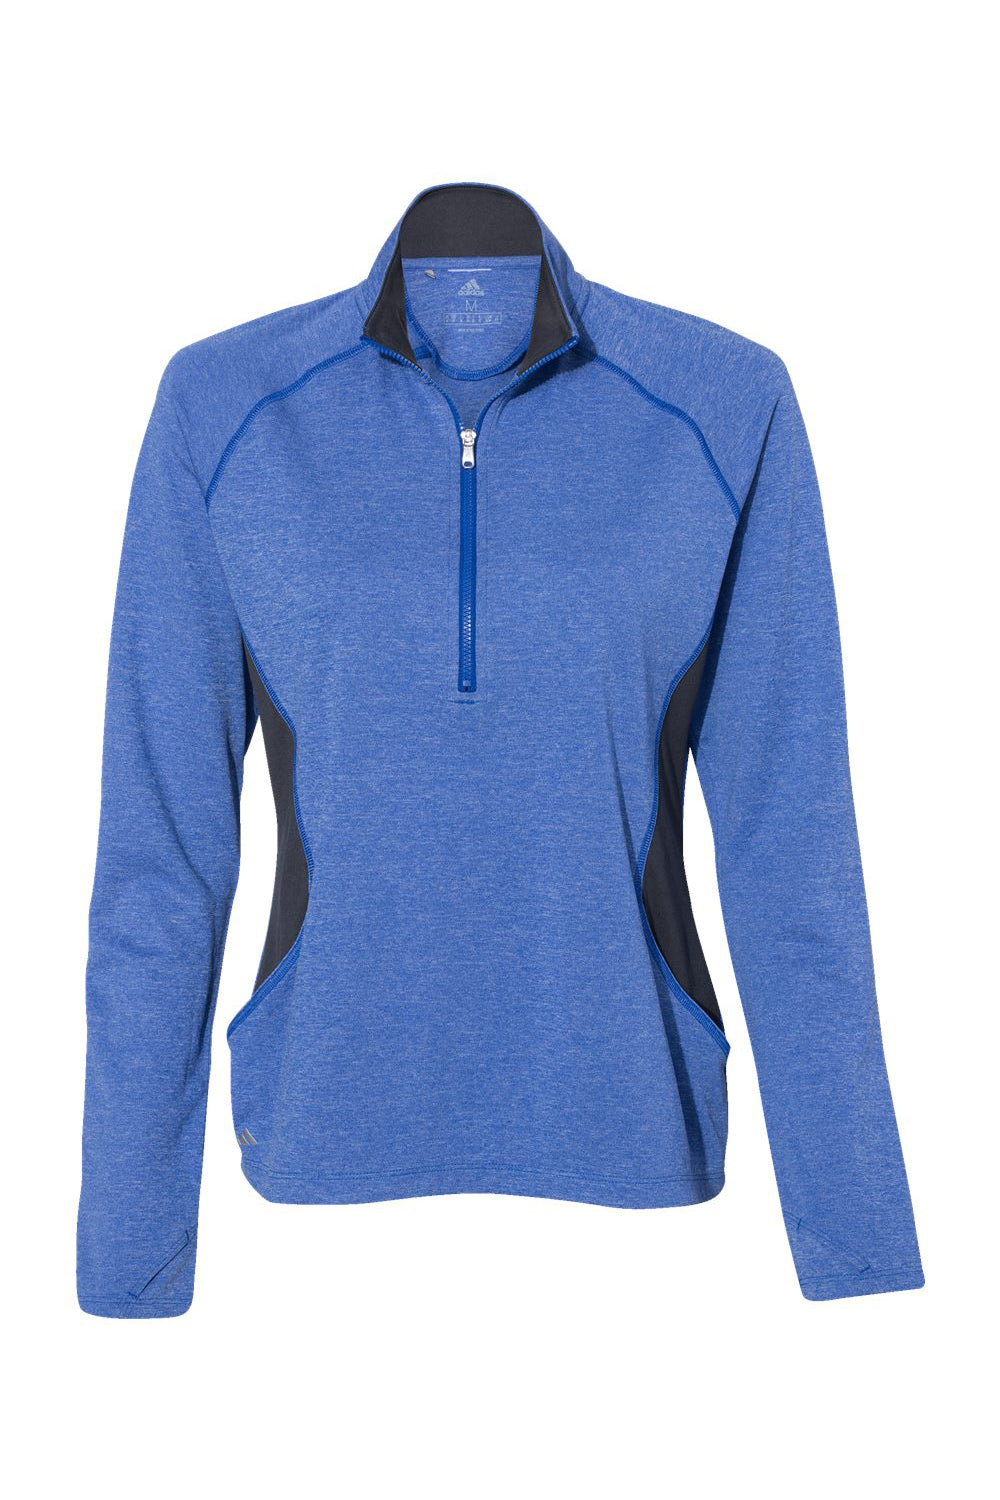 Adidas A281 Womens UPF 50+ 1/4 Zip Sweatshirt Heather Collegiate Royal Blue/Carbon Grey Flat Front